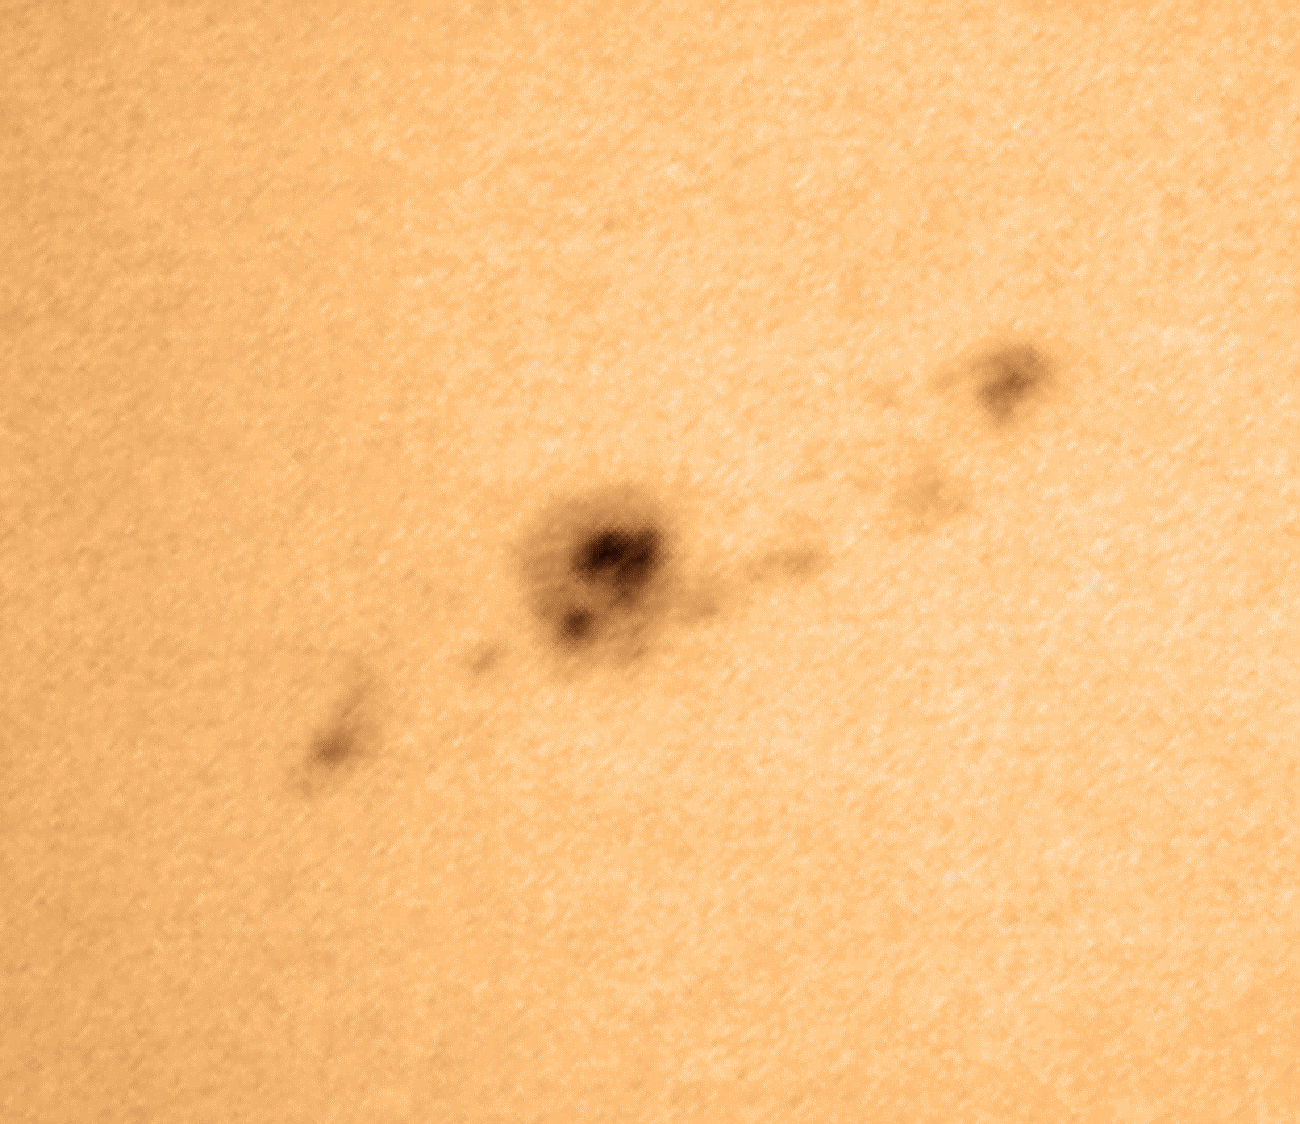 20th April Large Sunspot Group AR1726